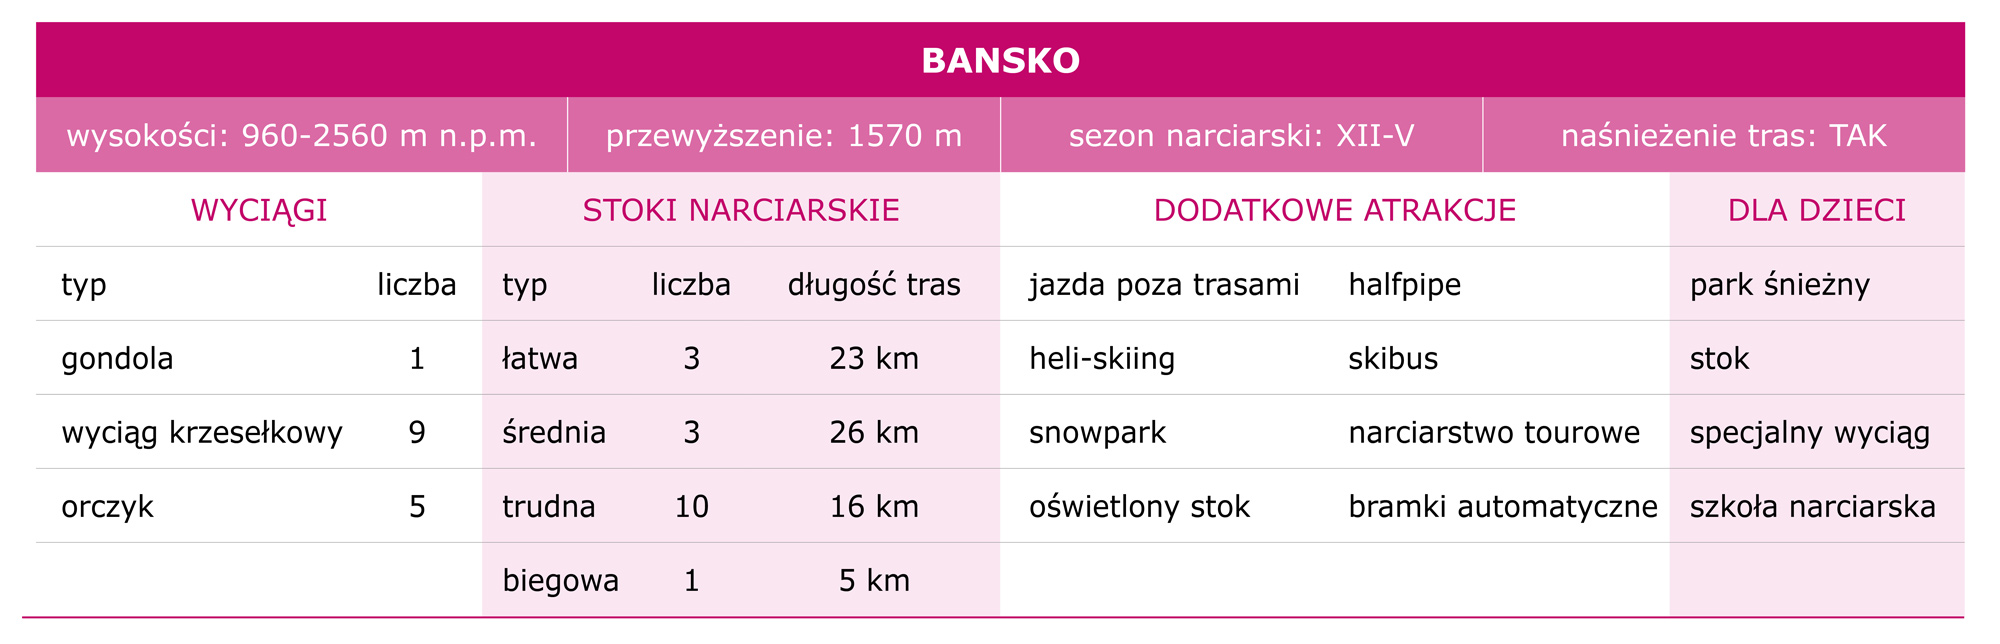 tabelka-Bansko.jpg